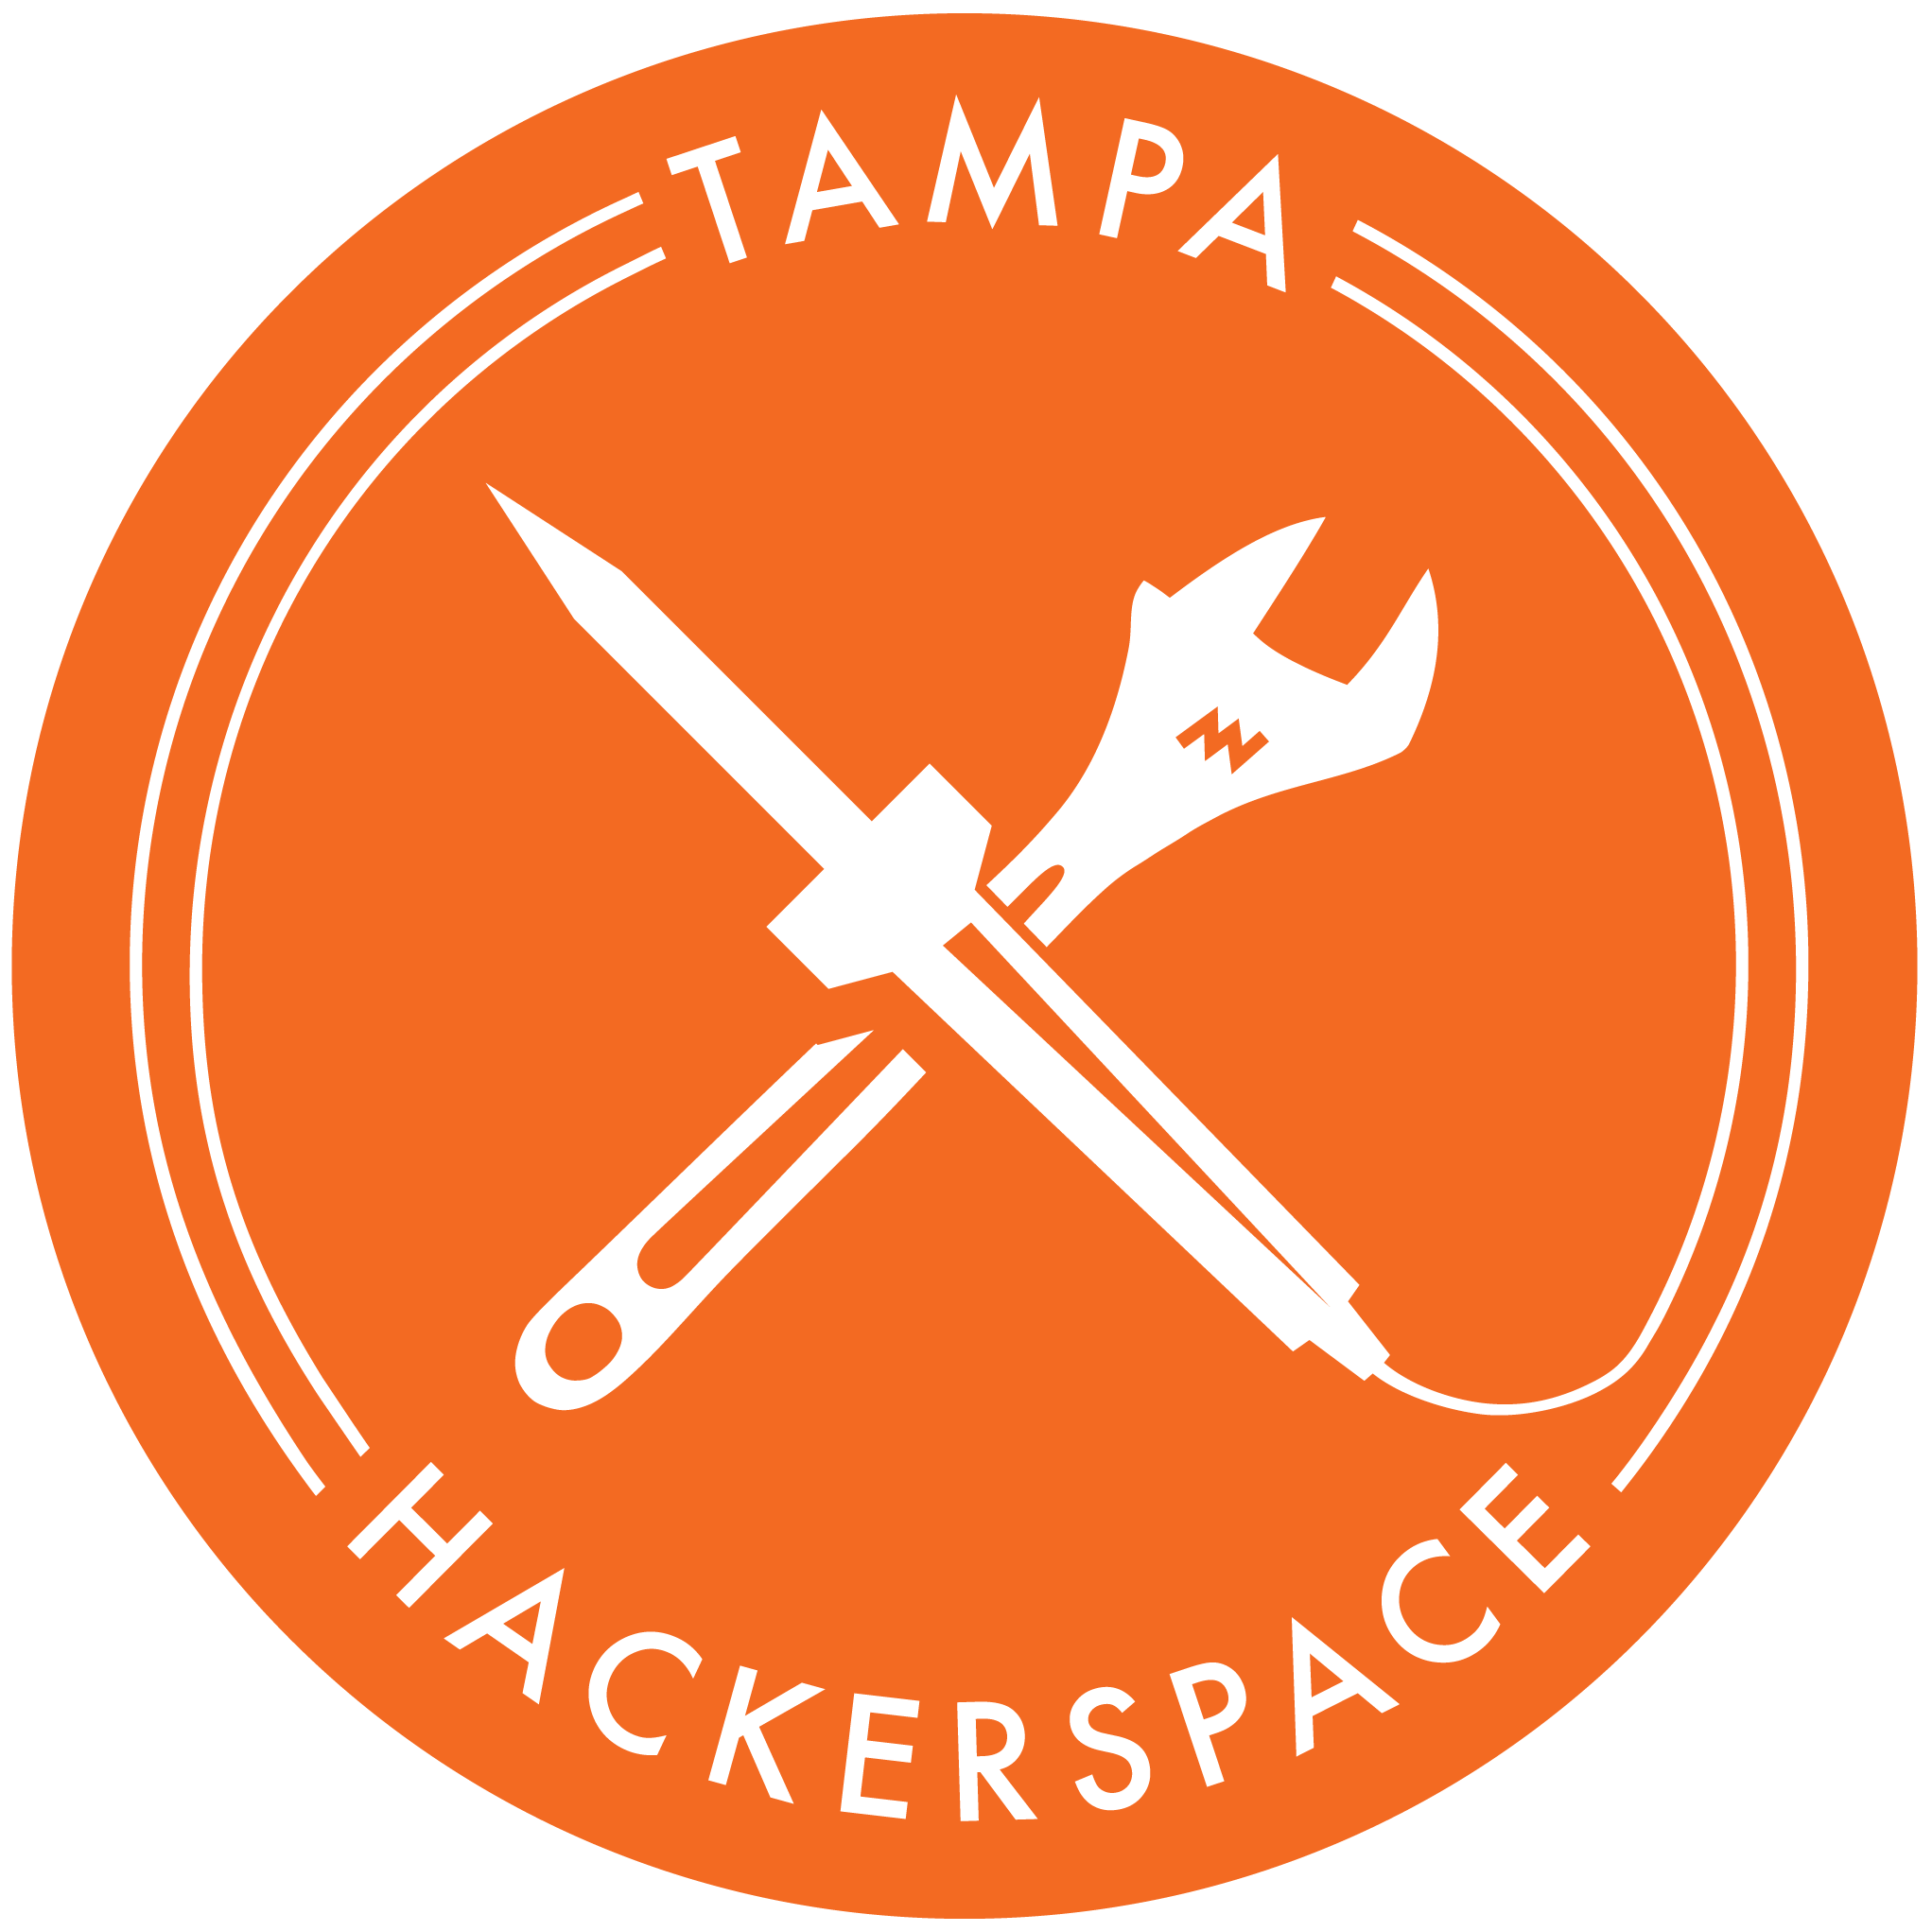 Tampa-Hackerspace-2048-Transparent-border.png